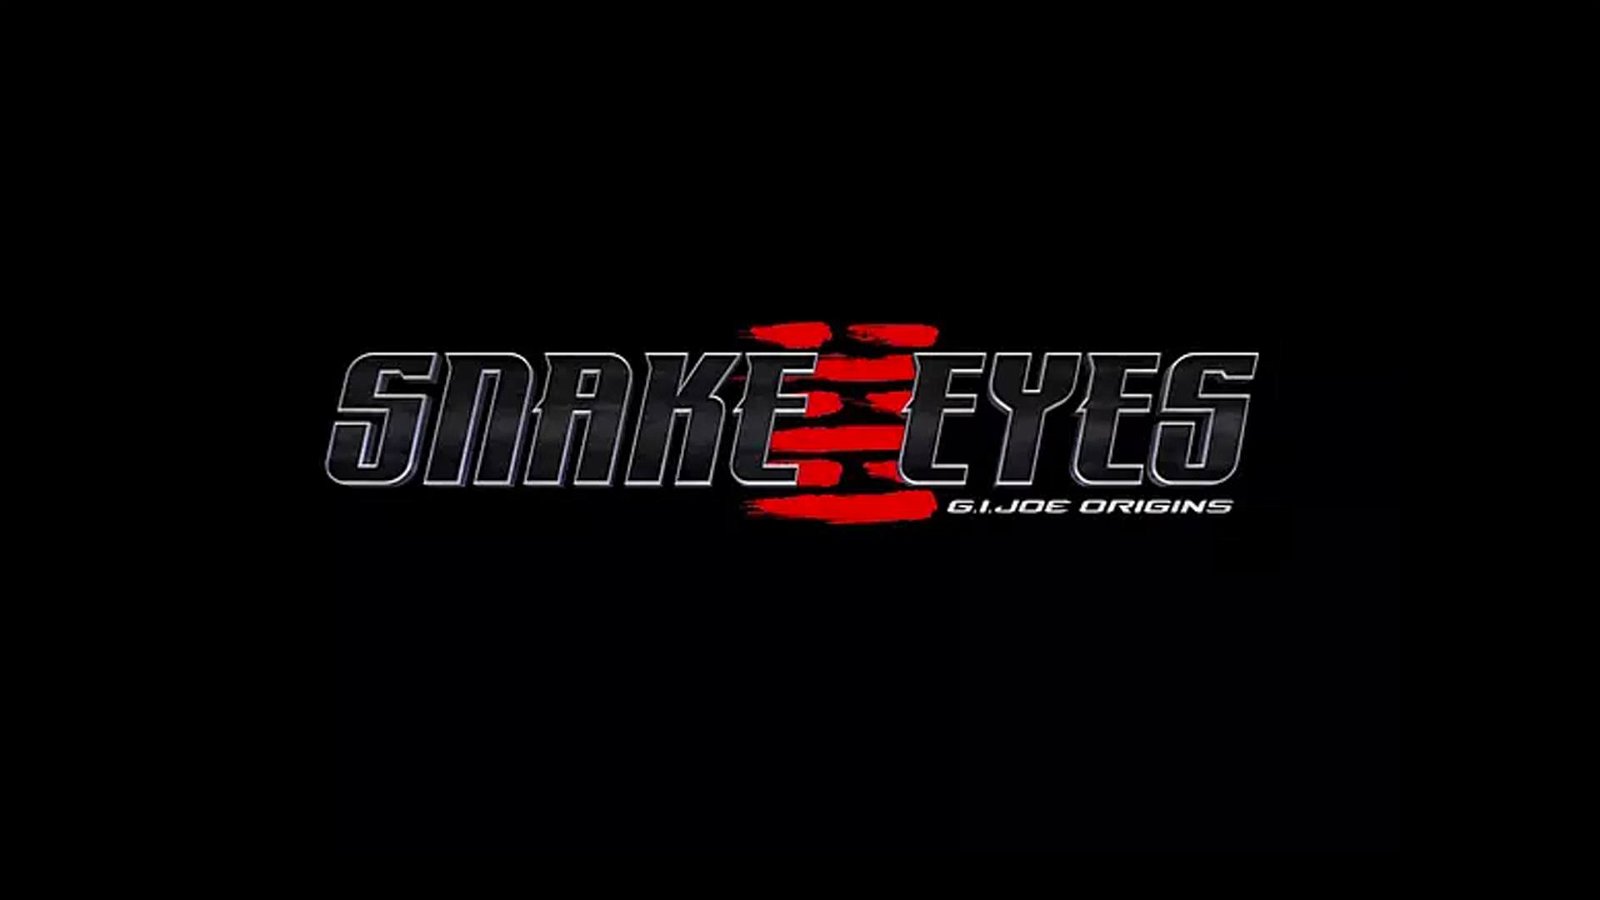 Immagine di Snake Eyes: G.I. Joe Origins è stato rimandato al 2021